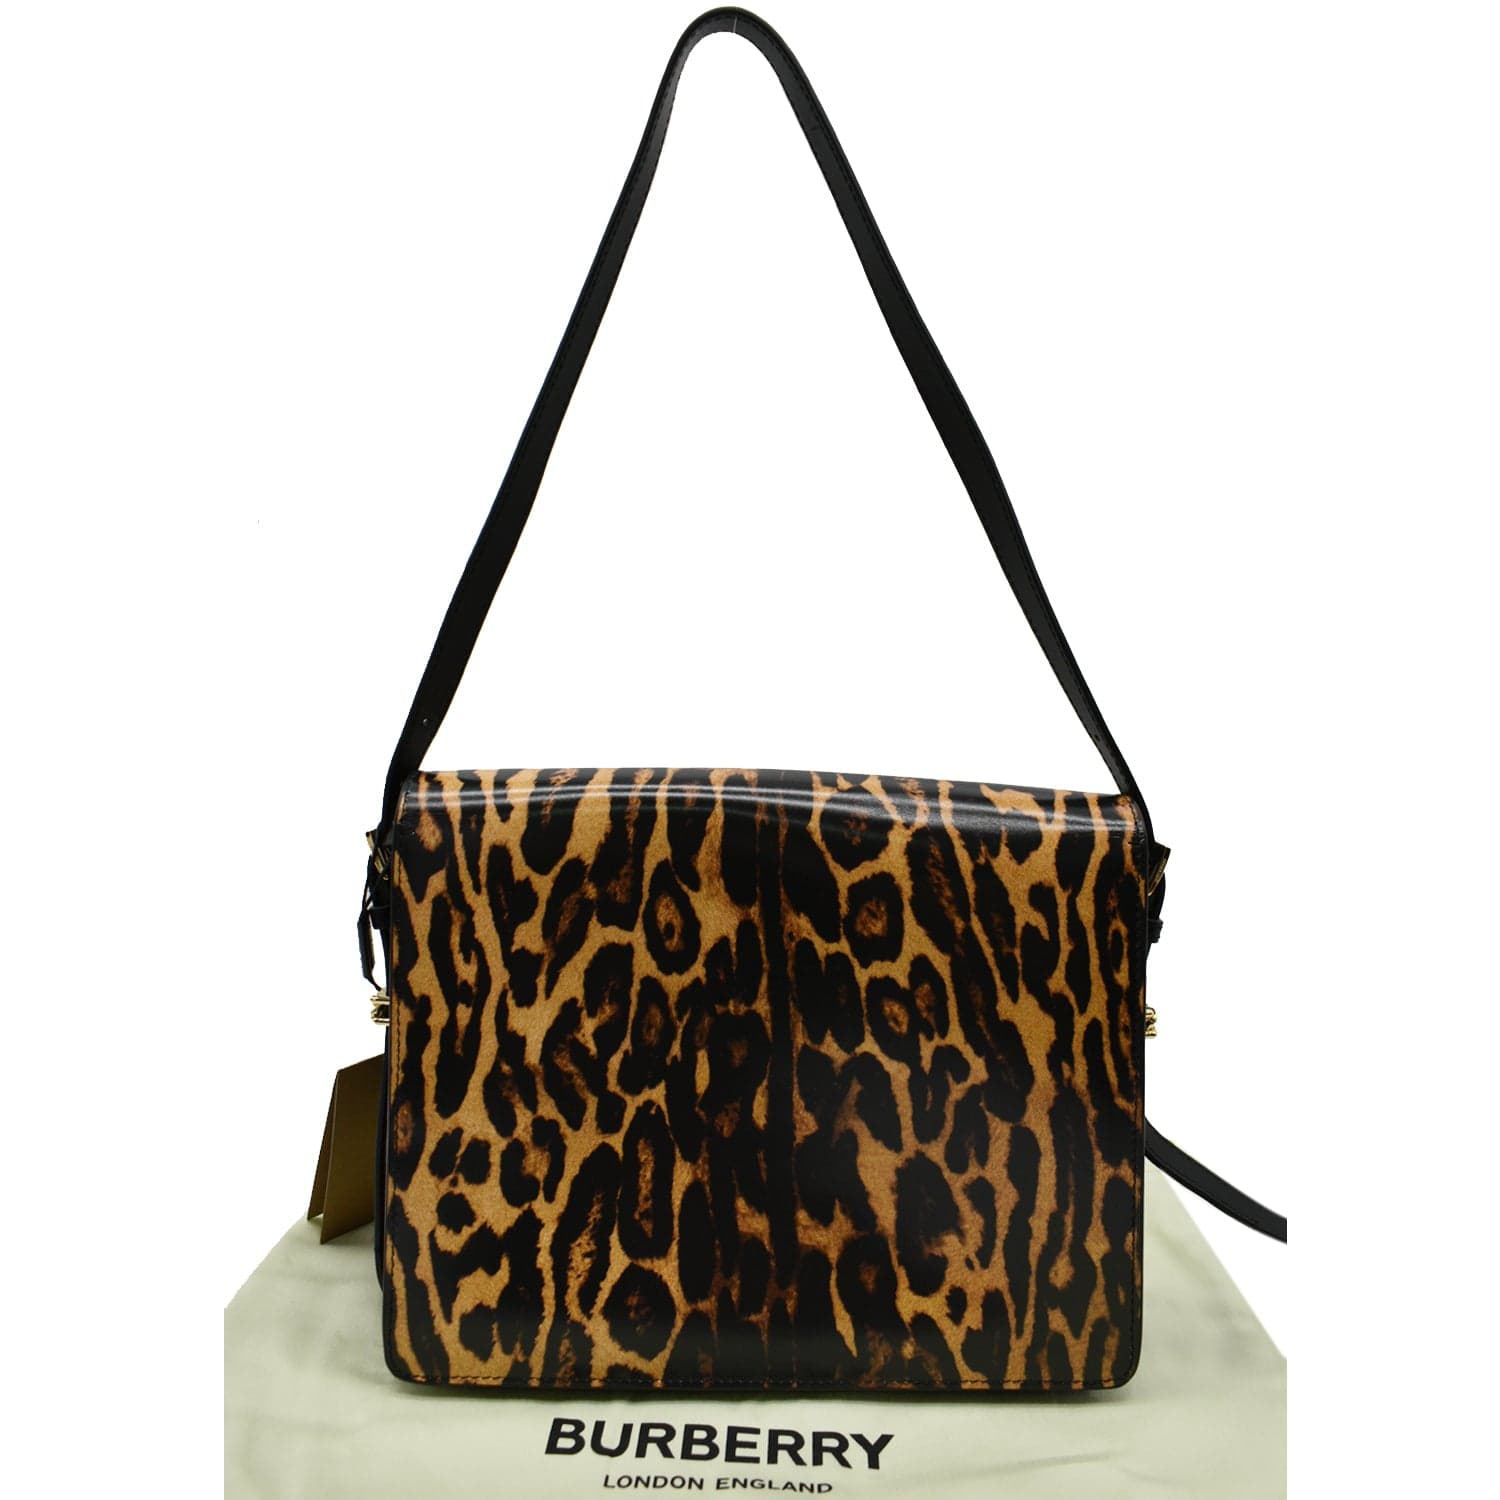 Luxury handbag - Dolce & Gabbana large leopard print tote bag